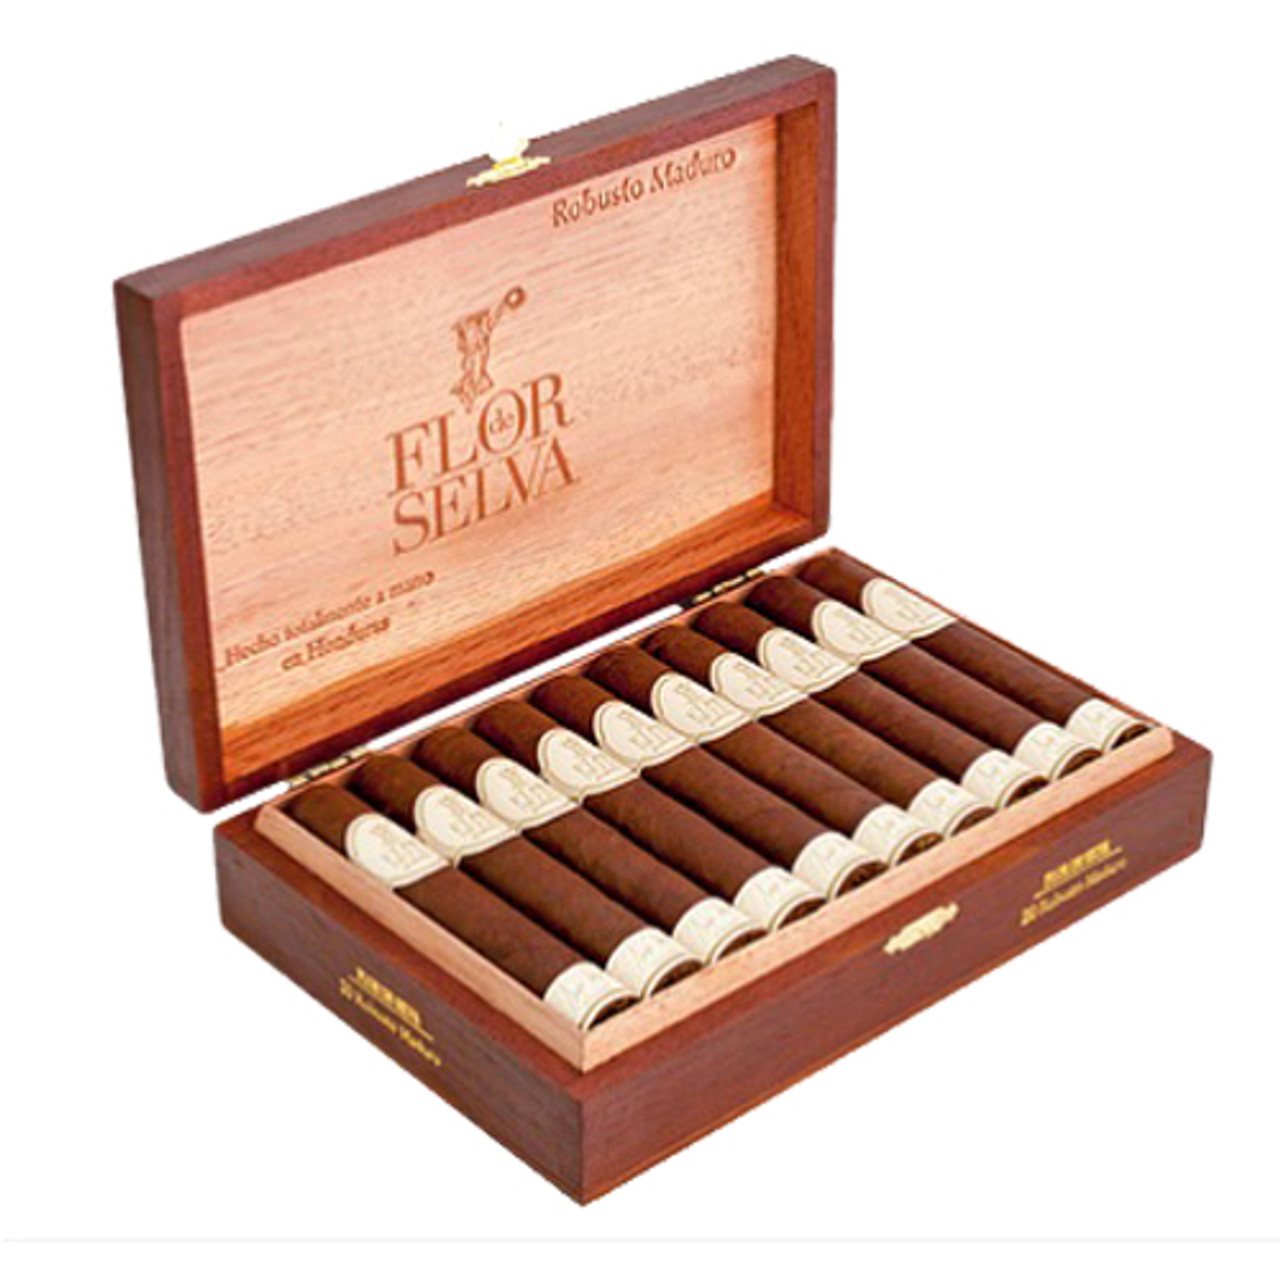 Maya Selva Flor De Selva Robusto Maduro Cigars Maduro Box Of 20 - robuxu.com